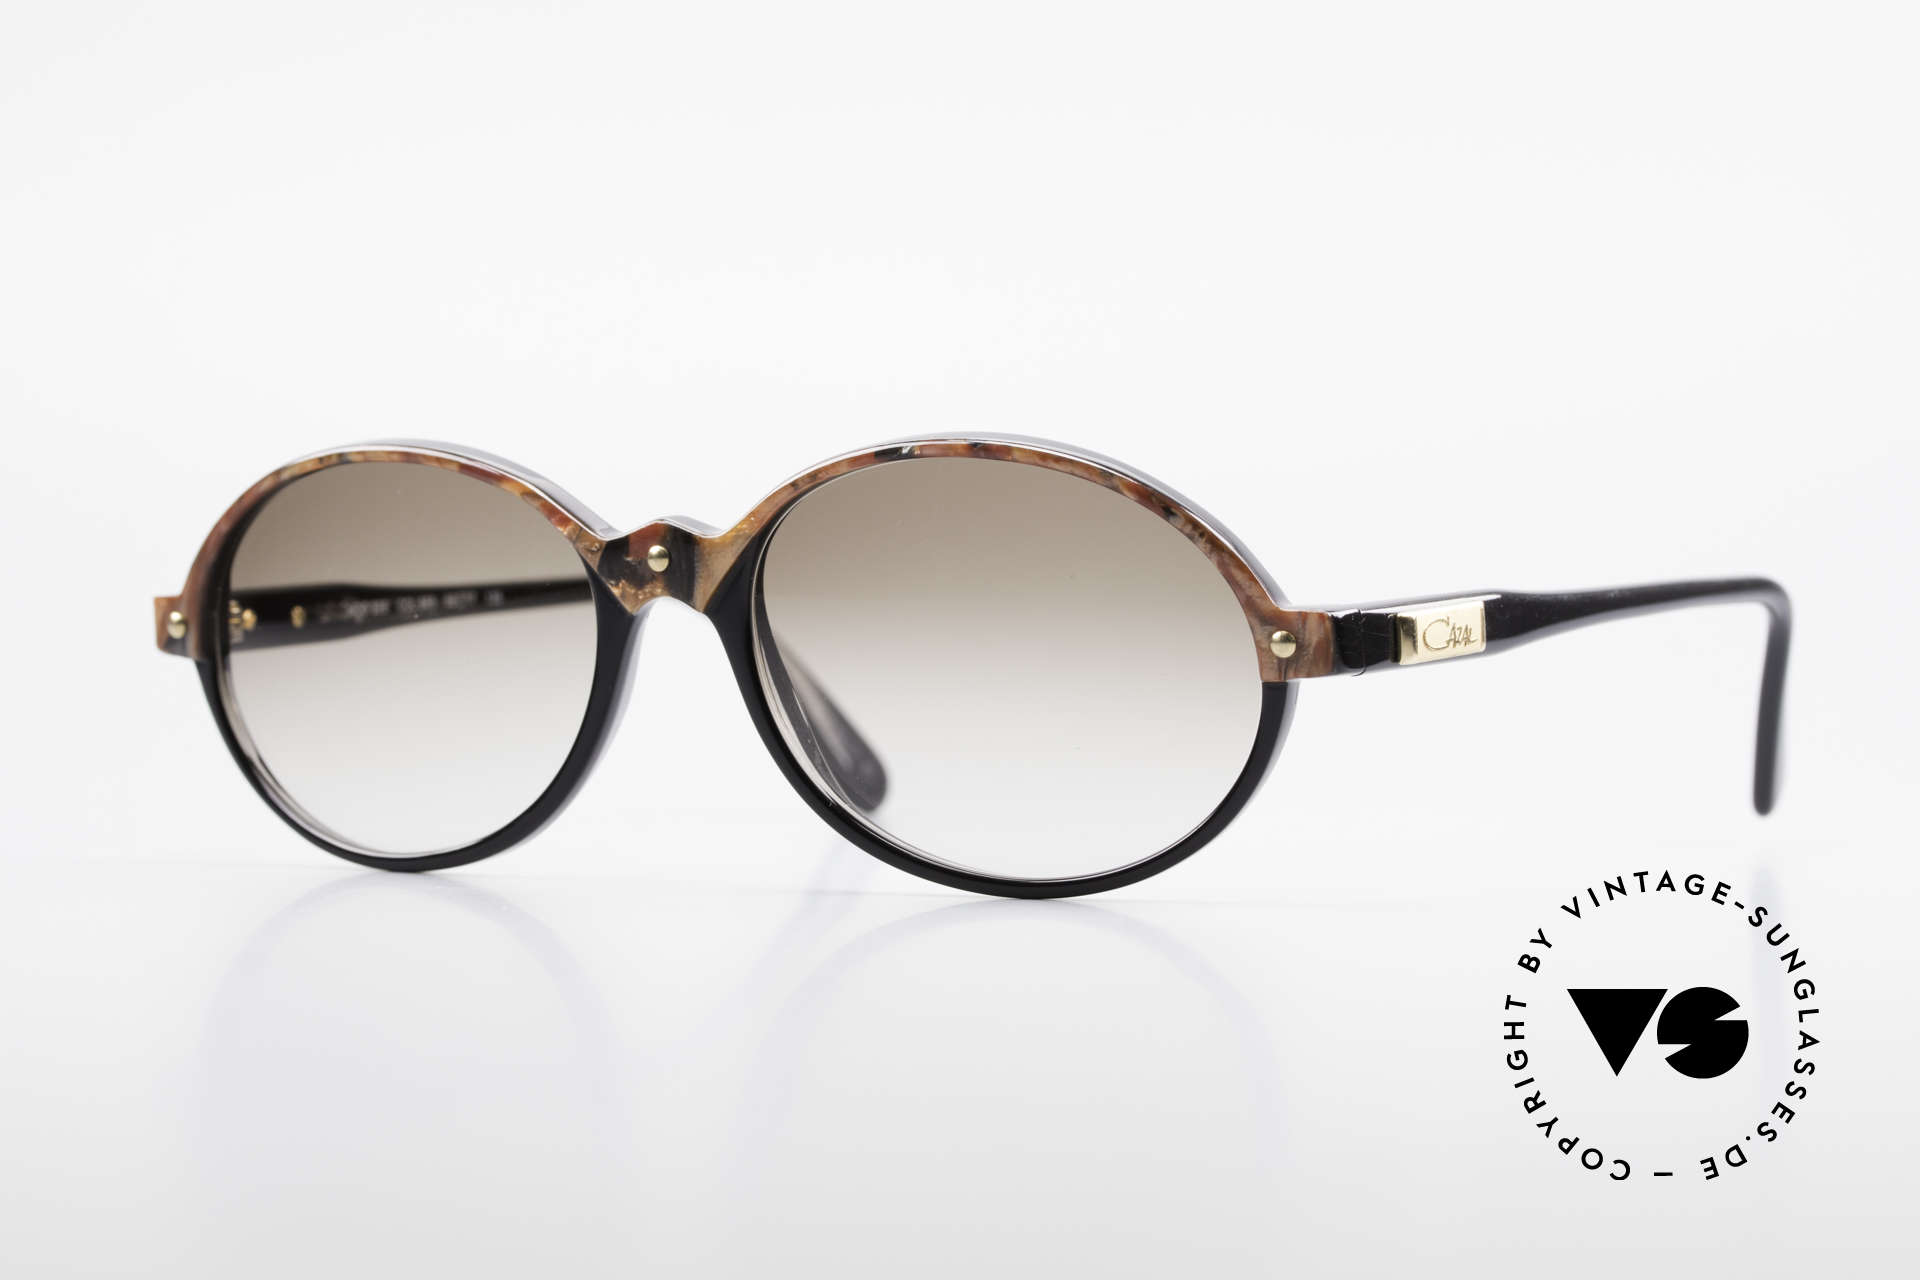 Cazal 328 Oval Vintage Sunglasses 90's, oval round Cazal vintage designer sunglasses, Made for Women